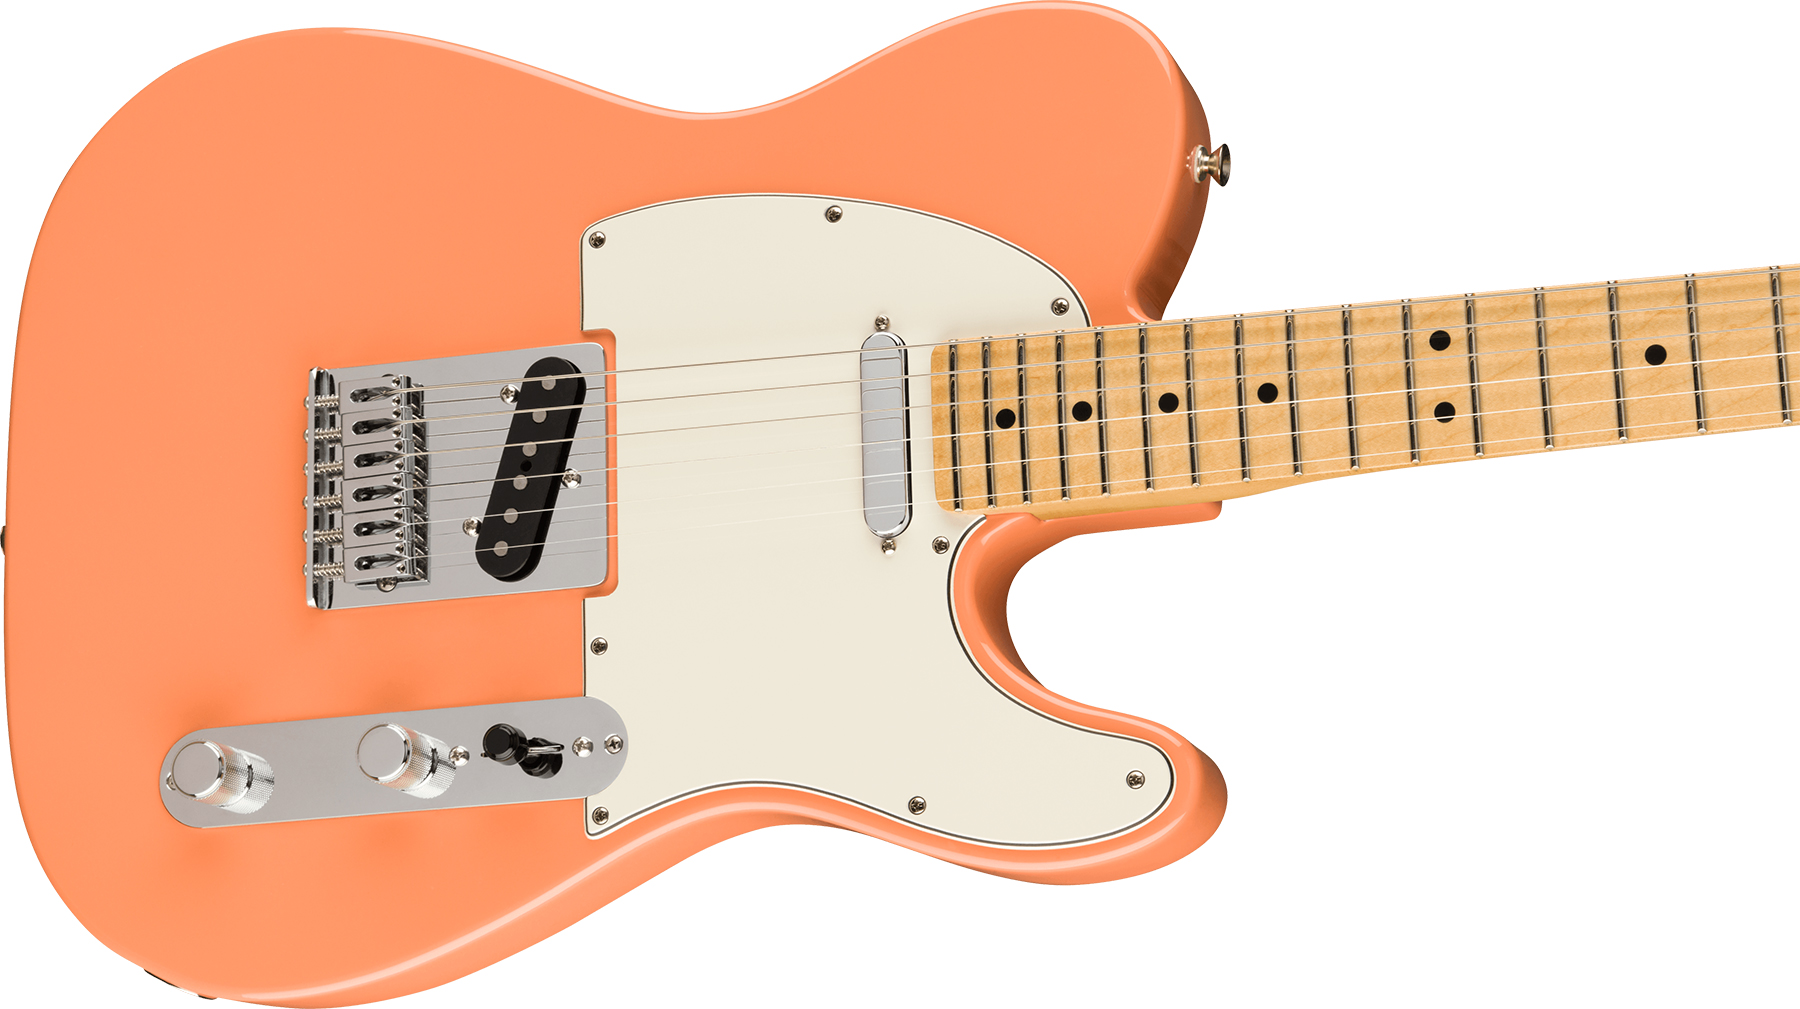 Fender Tele Player Ltd Mex 2s Ht Mn - Pacific Peach - Guitarra eléctrica con forma de tel - Variation 2